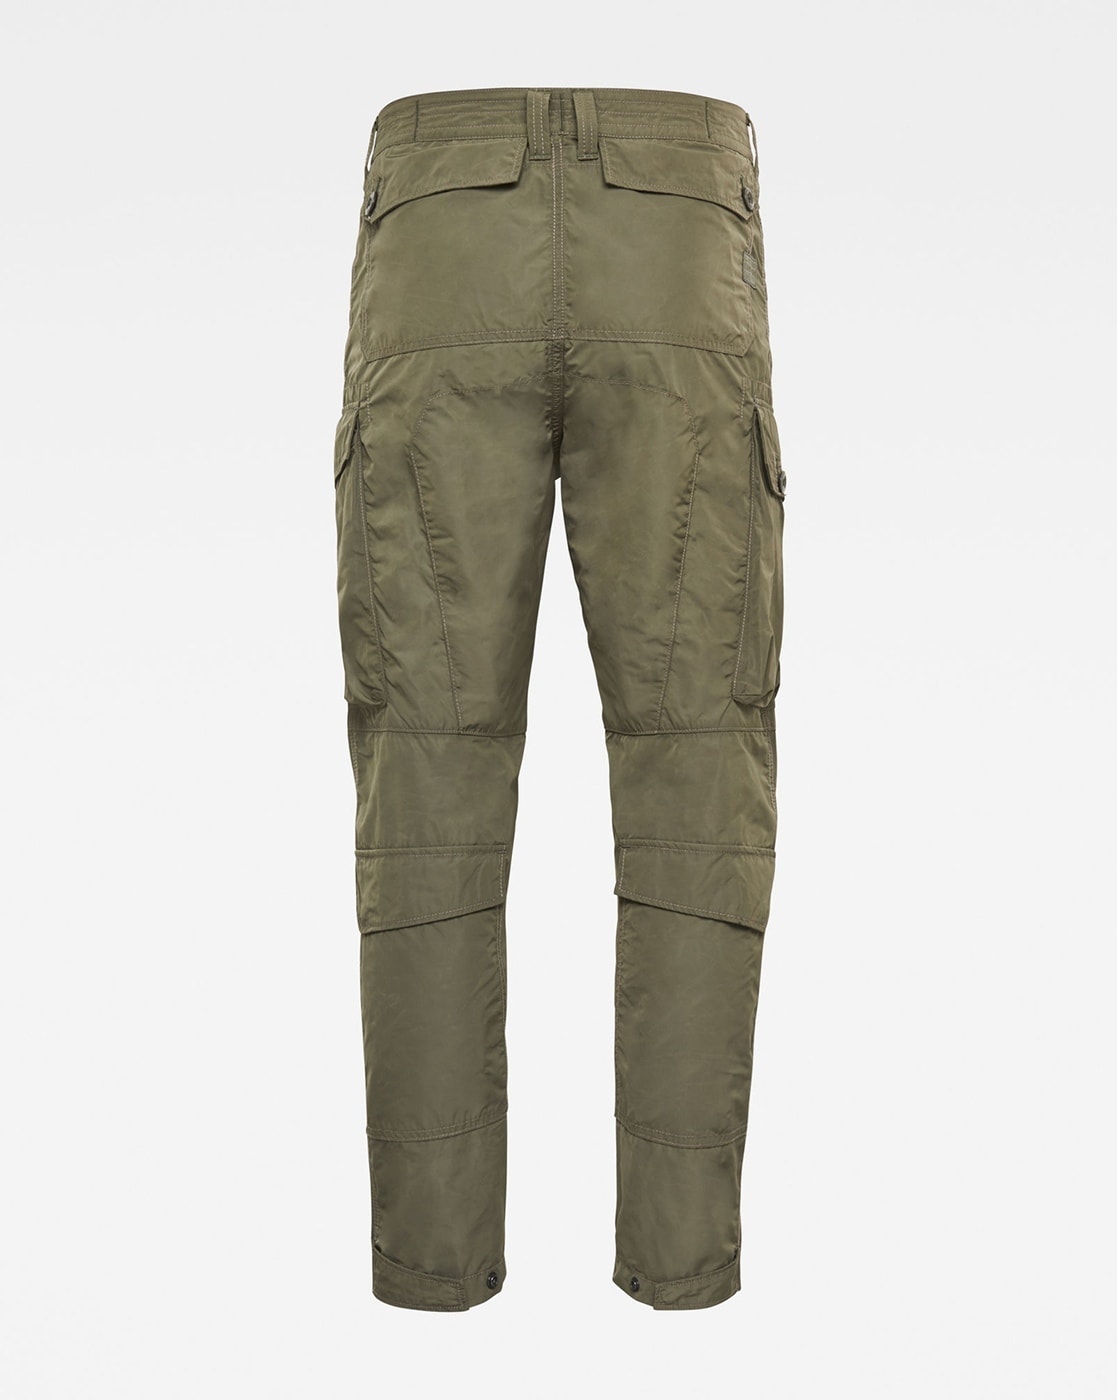 Original 1970s British Army 1950 Pattern Jungle Green Trousers